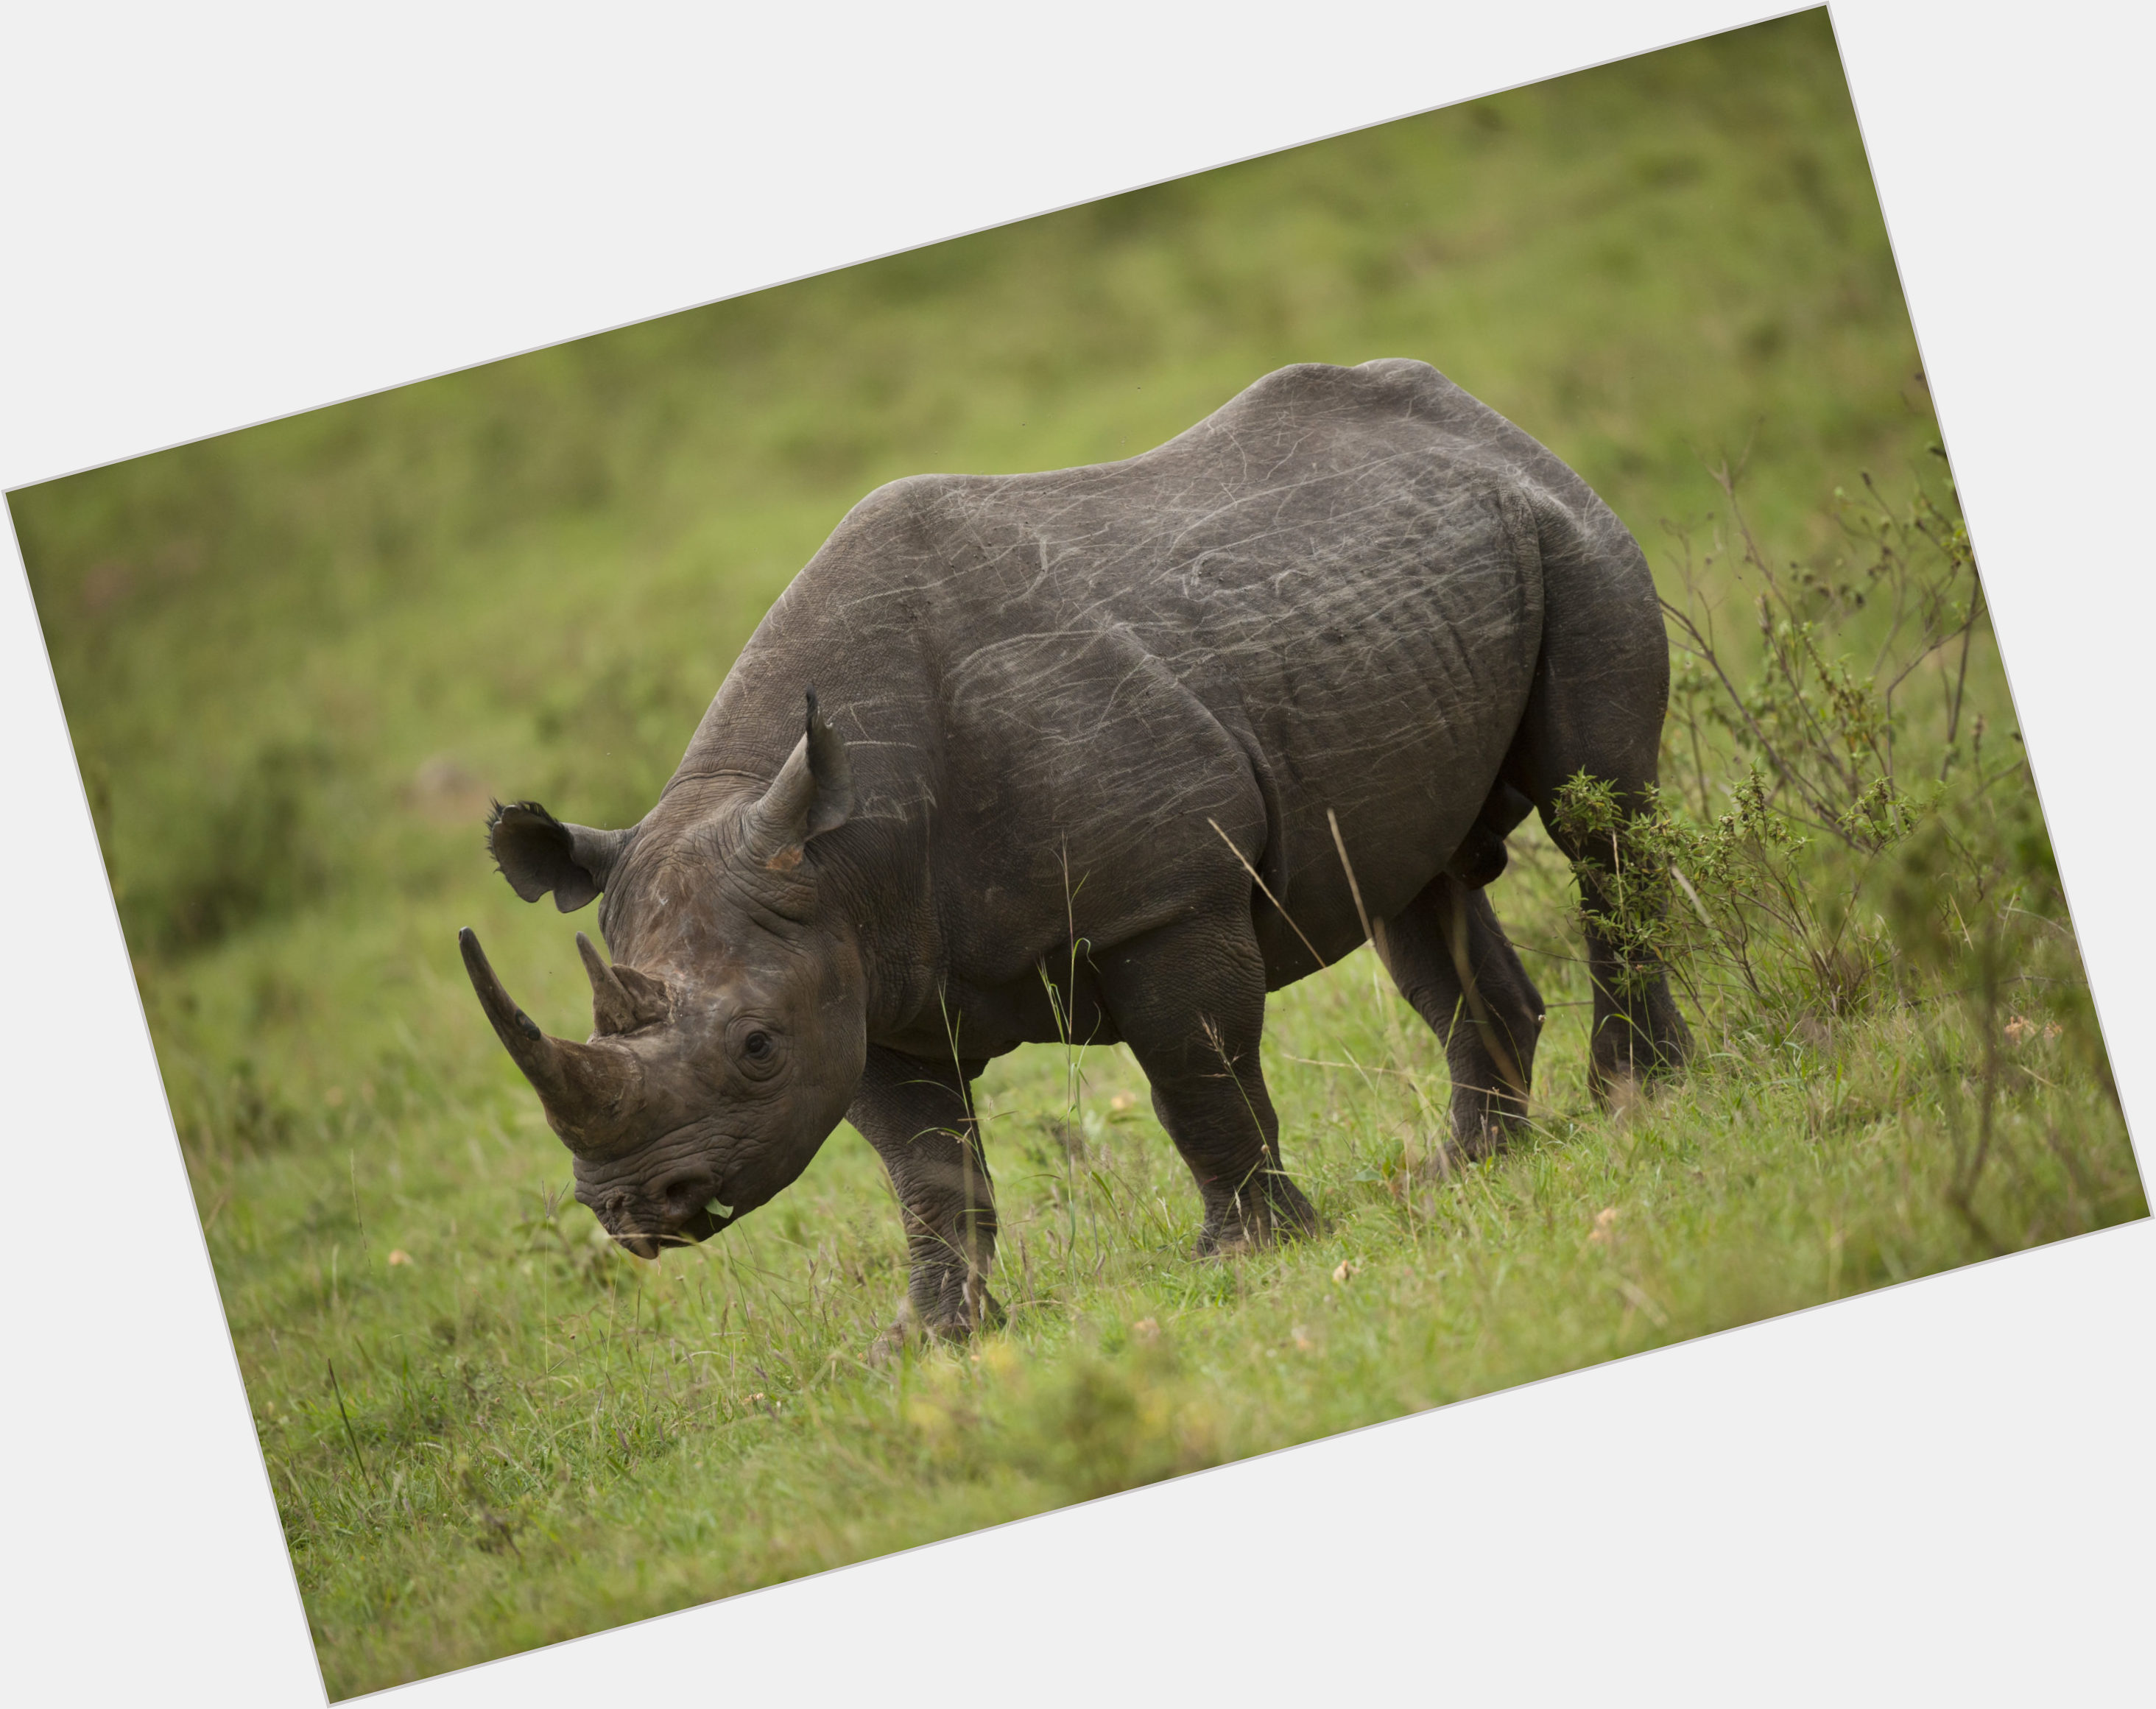 Rhino birthday 2015